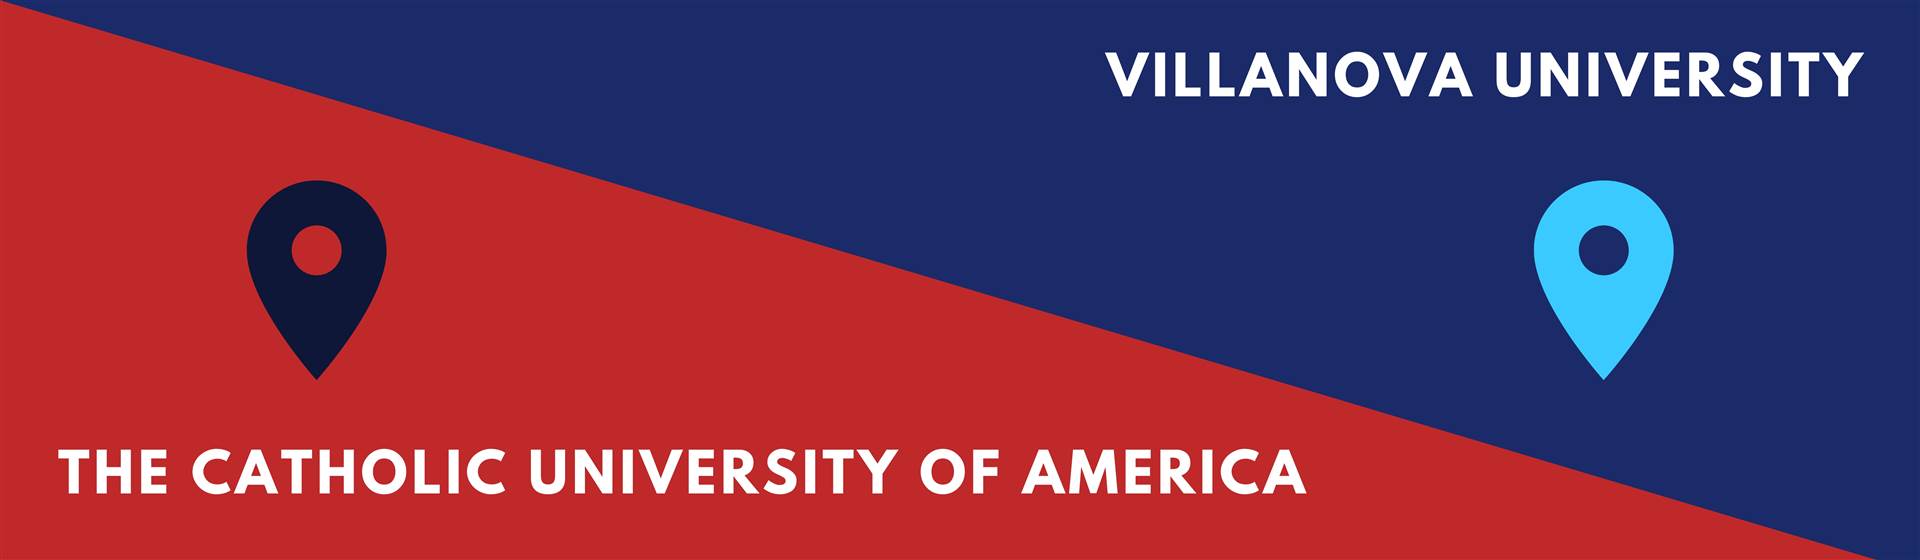 The Catholic University of America & Villanova University